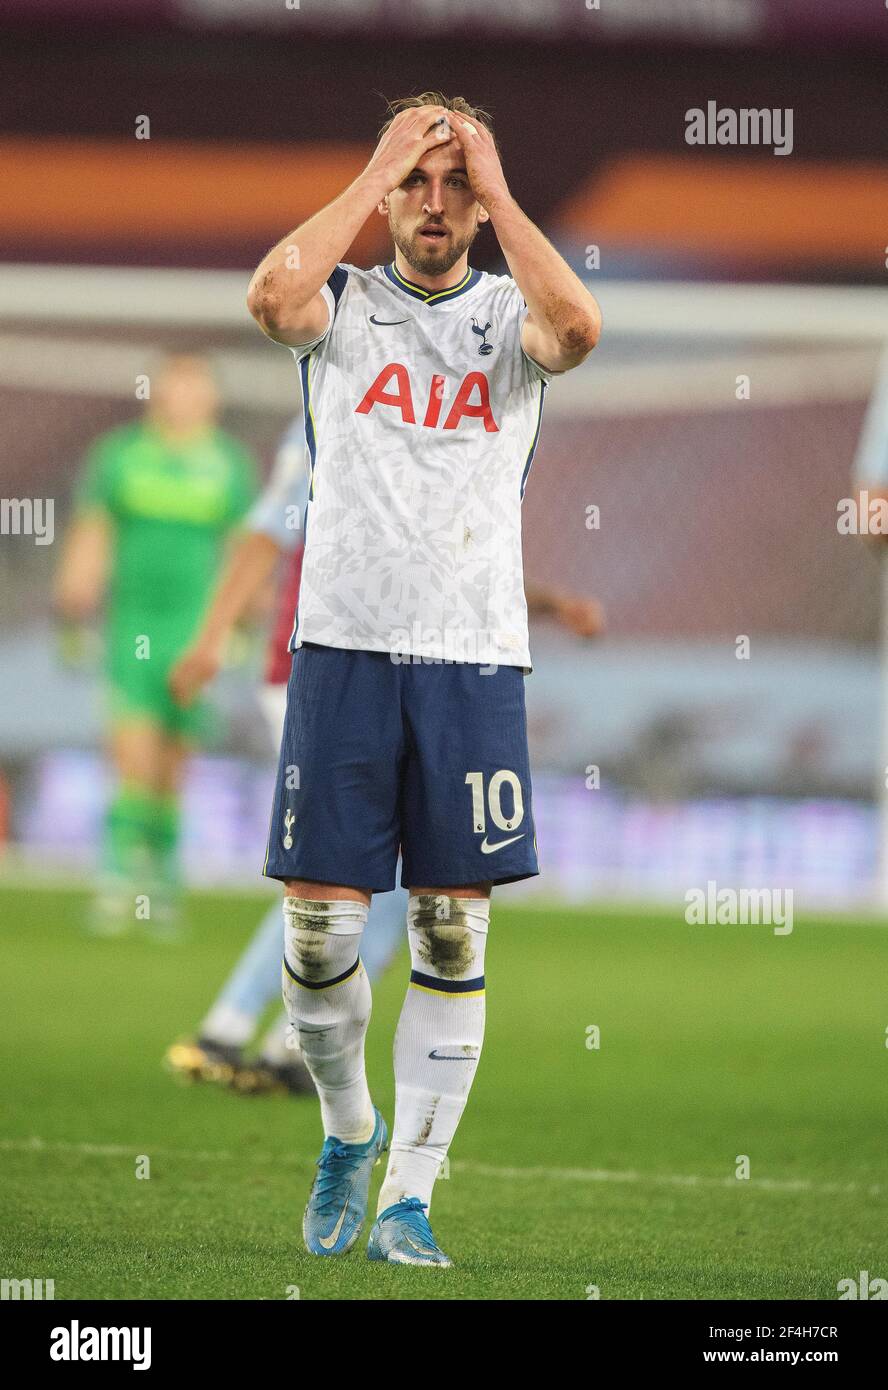 Villa Park, Birmingham, 21 Mär 2021 Tottenhams Harry Kane während ihres Premier League-Spiels gegen Aston Villa Bildnachweis : © Mark Pain / Alamy Live News Stockfoto